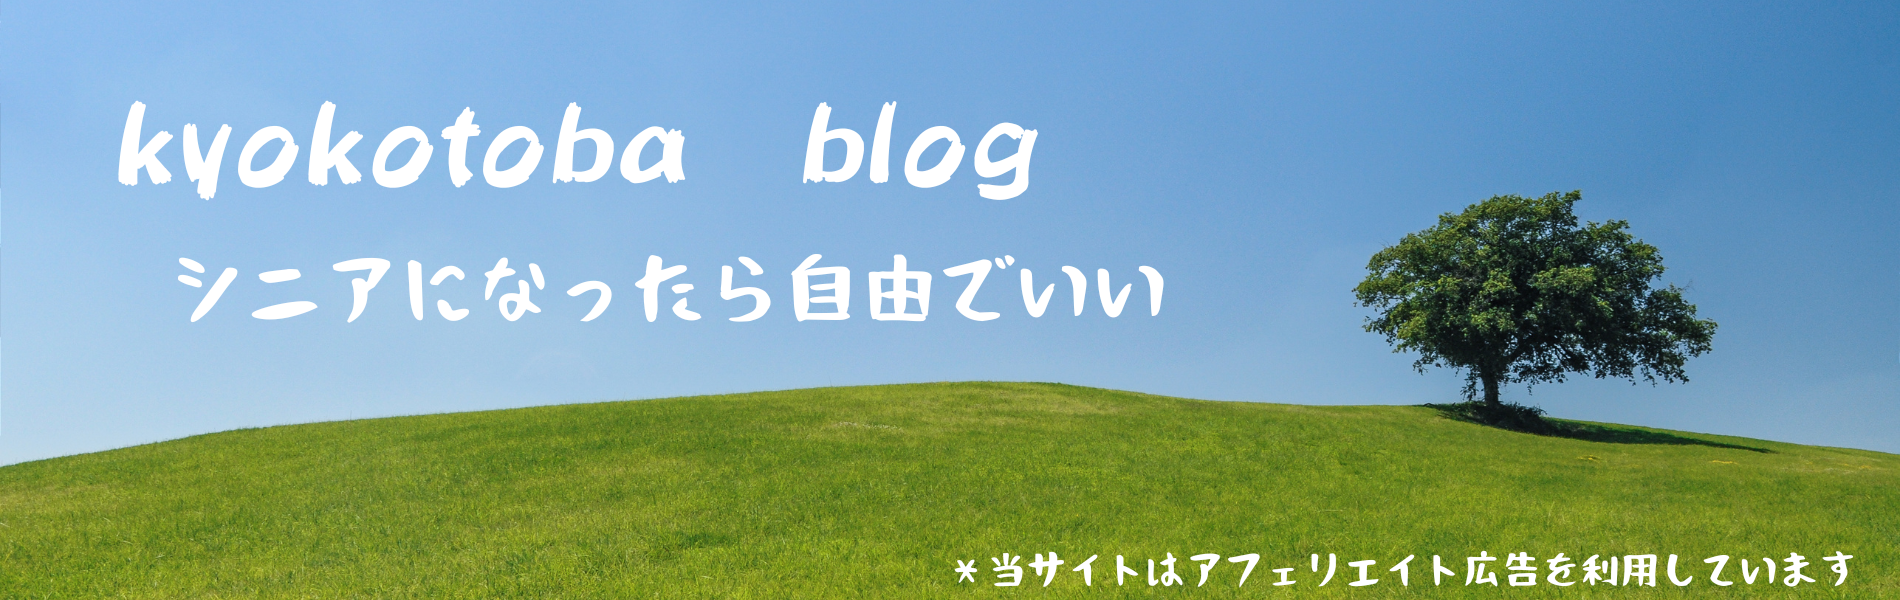 kyokotoba blog